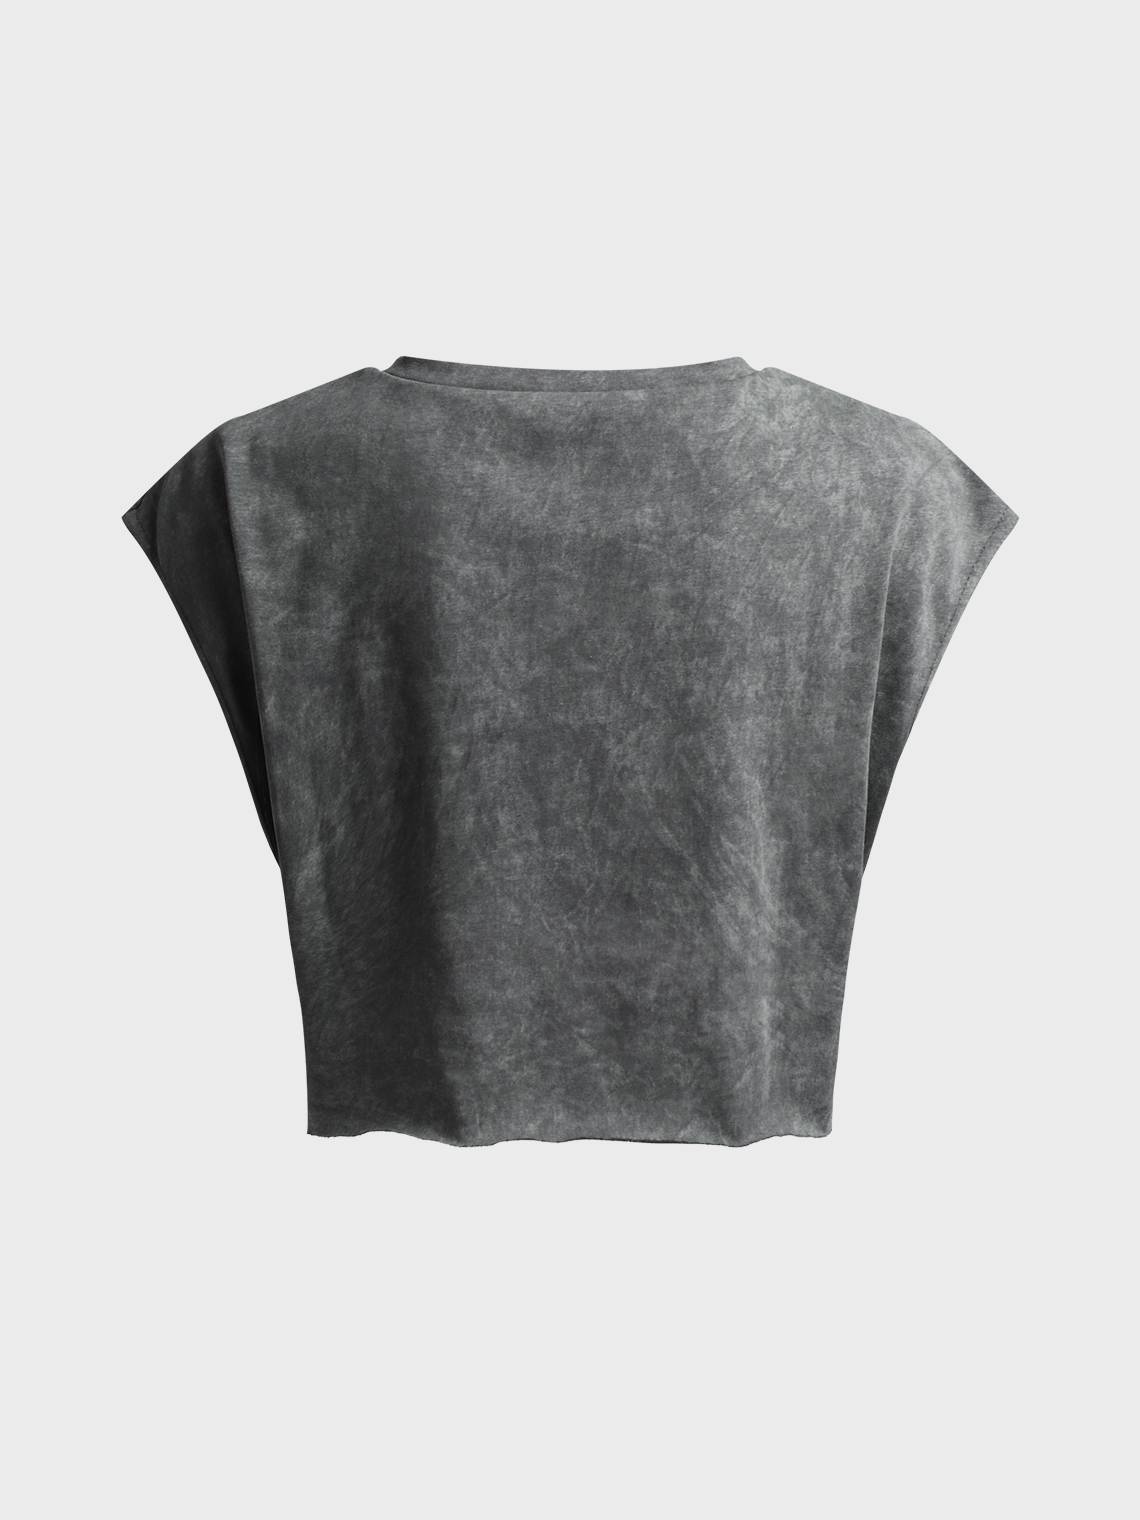 Street Gray Graphic Basic Top T-Shirt